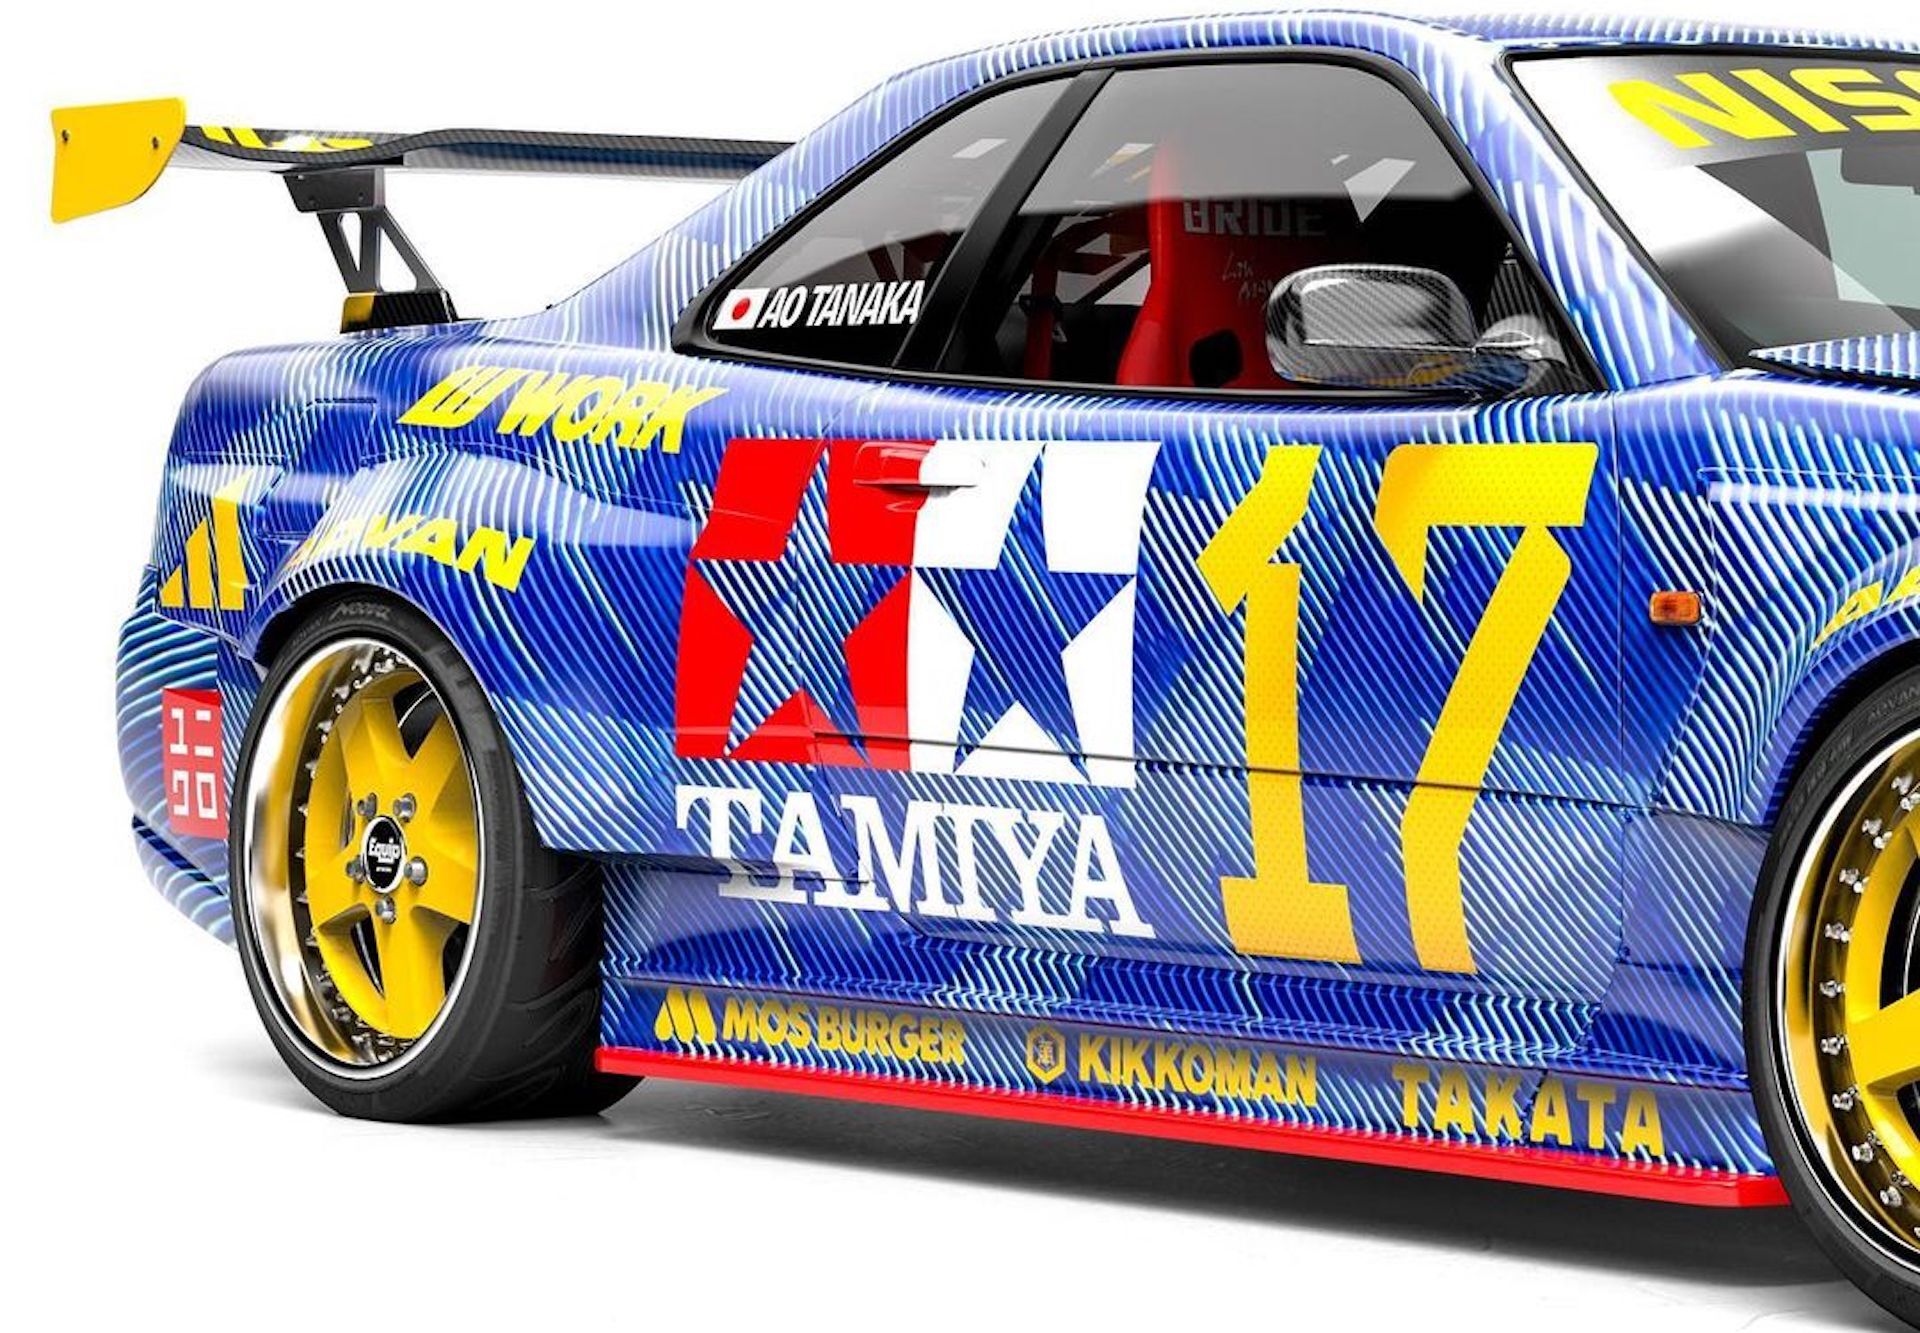 Garage Italia посвятила Nissan Skyline GT-R R34 японскому футболисту